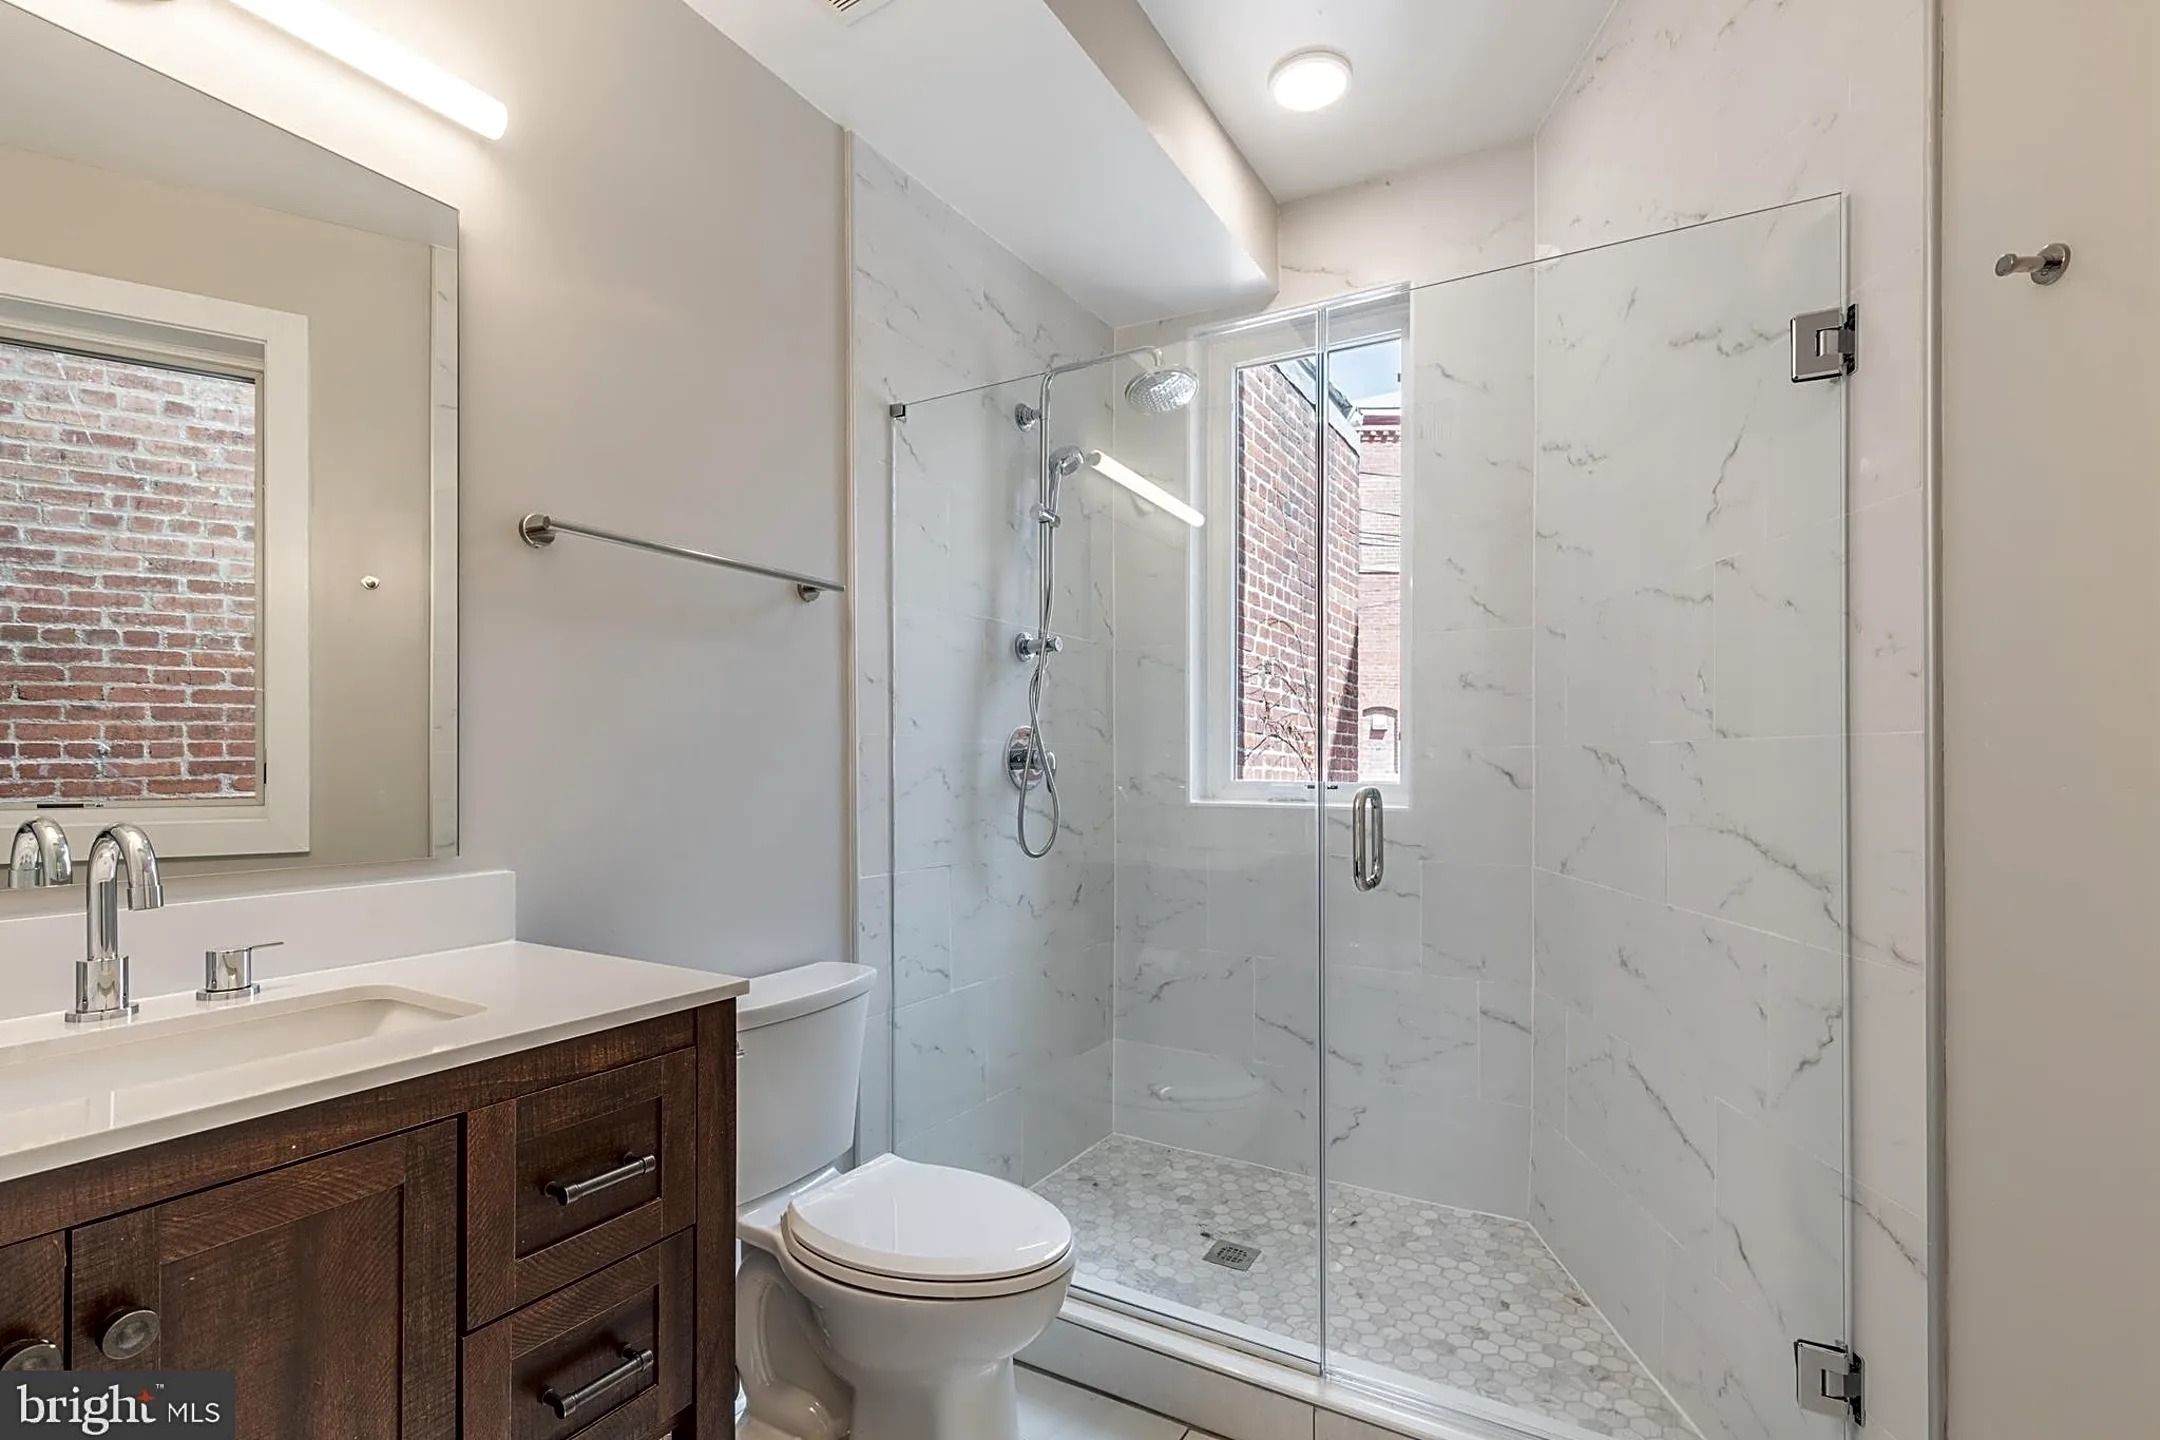 Bathroom - 1318 Pennsylvania Ave. SE #B - Washington, DC